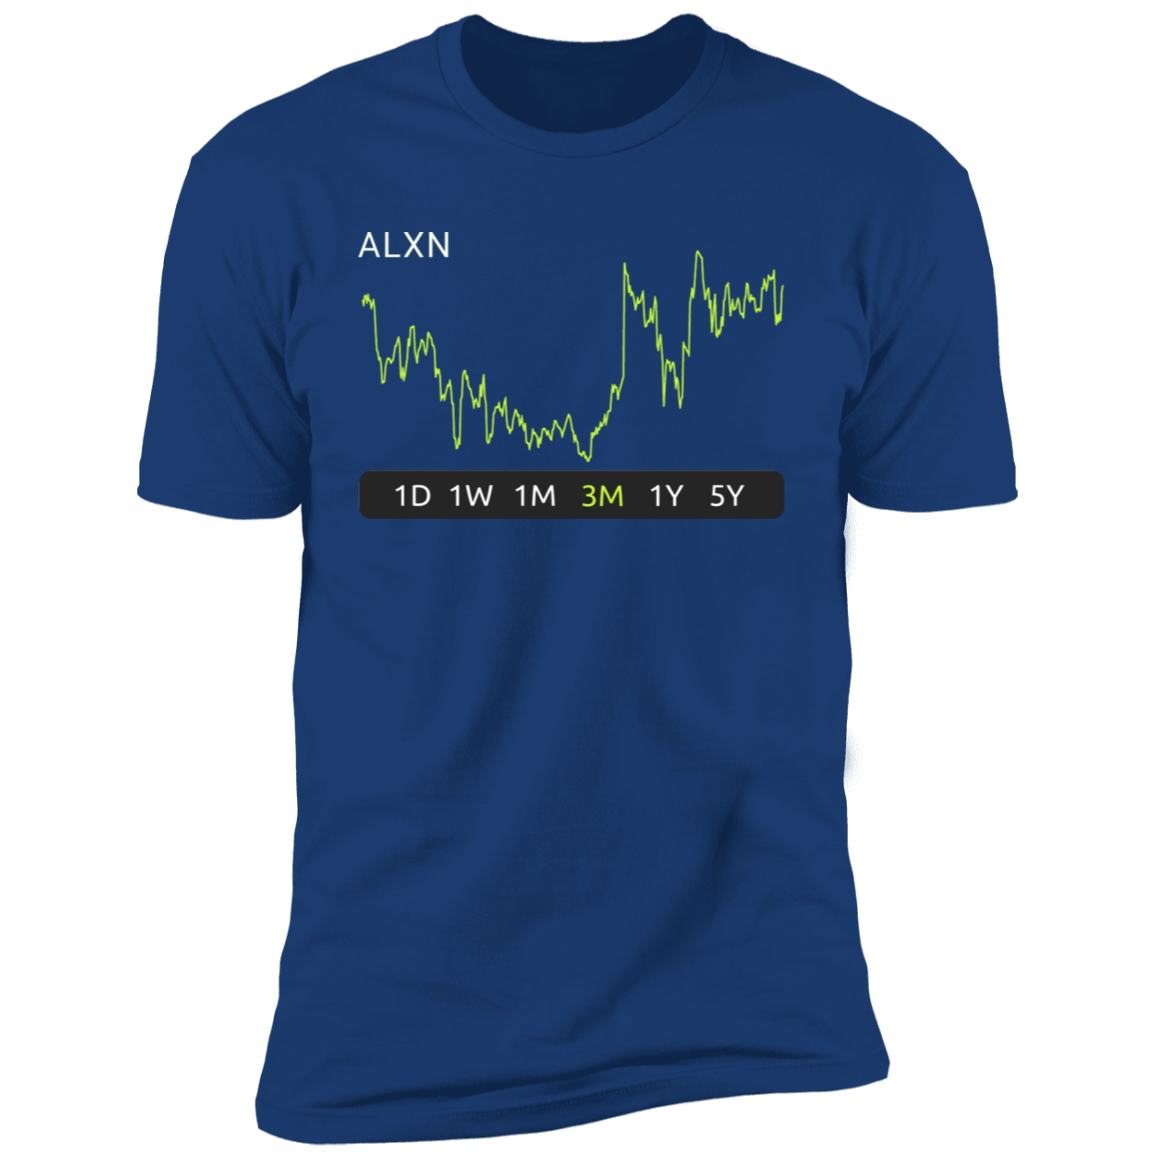 ALXN Stock 3m Premium T-Shirt